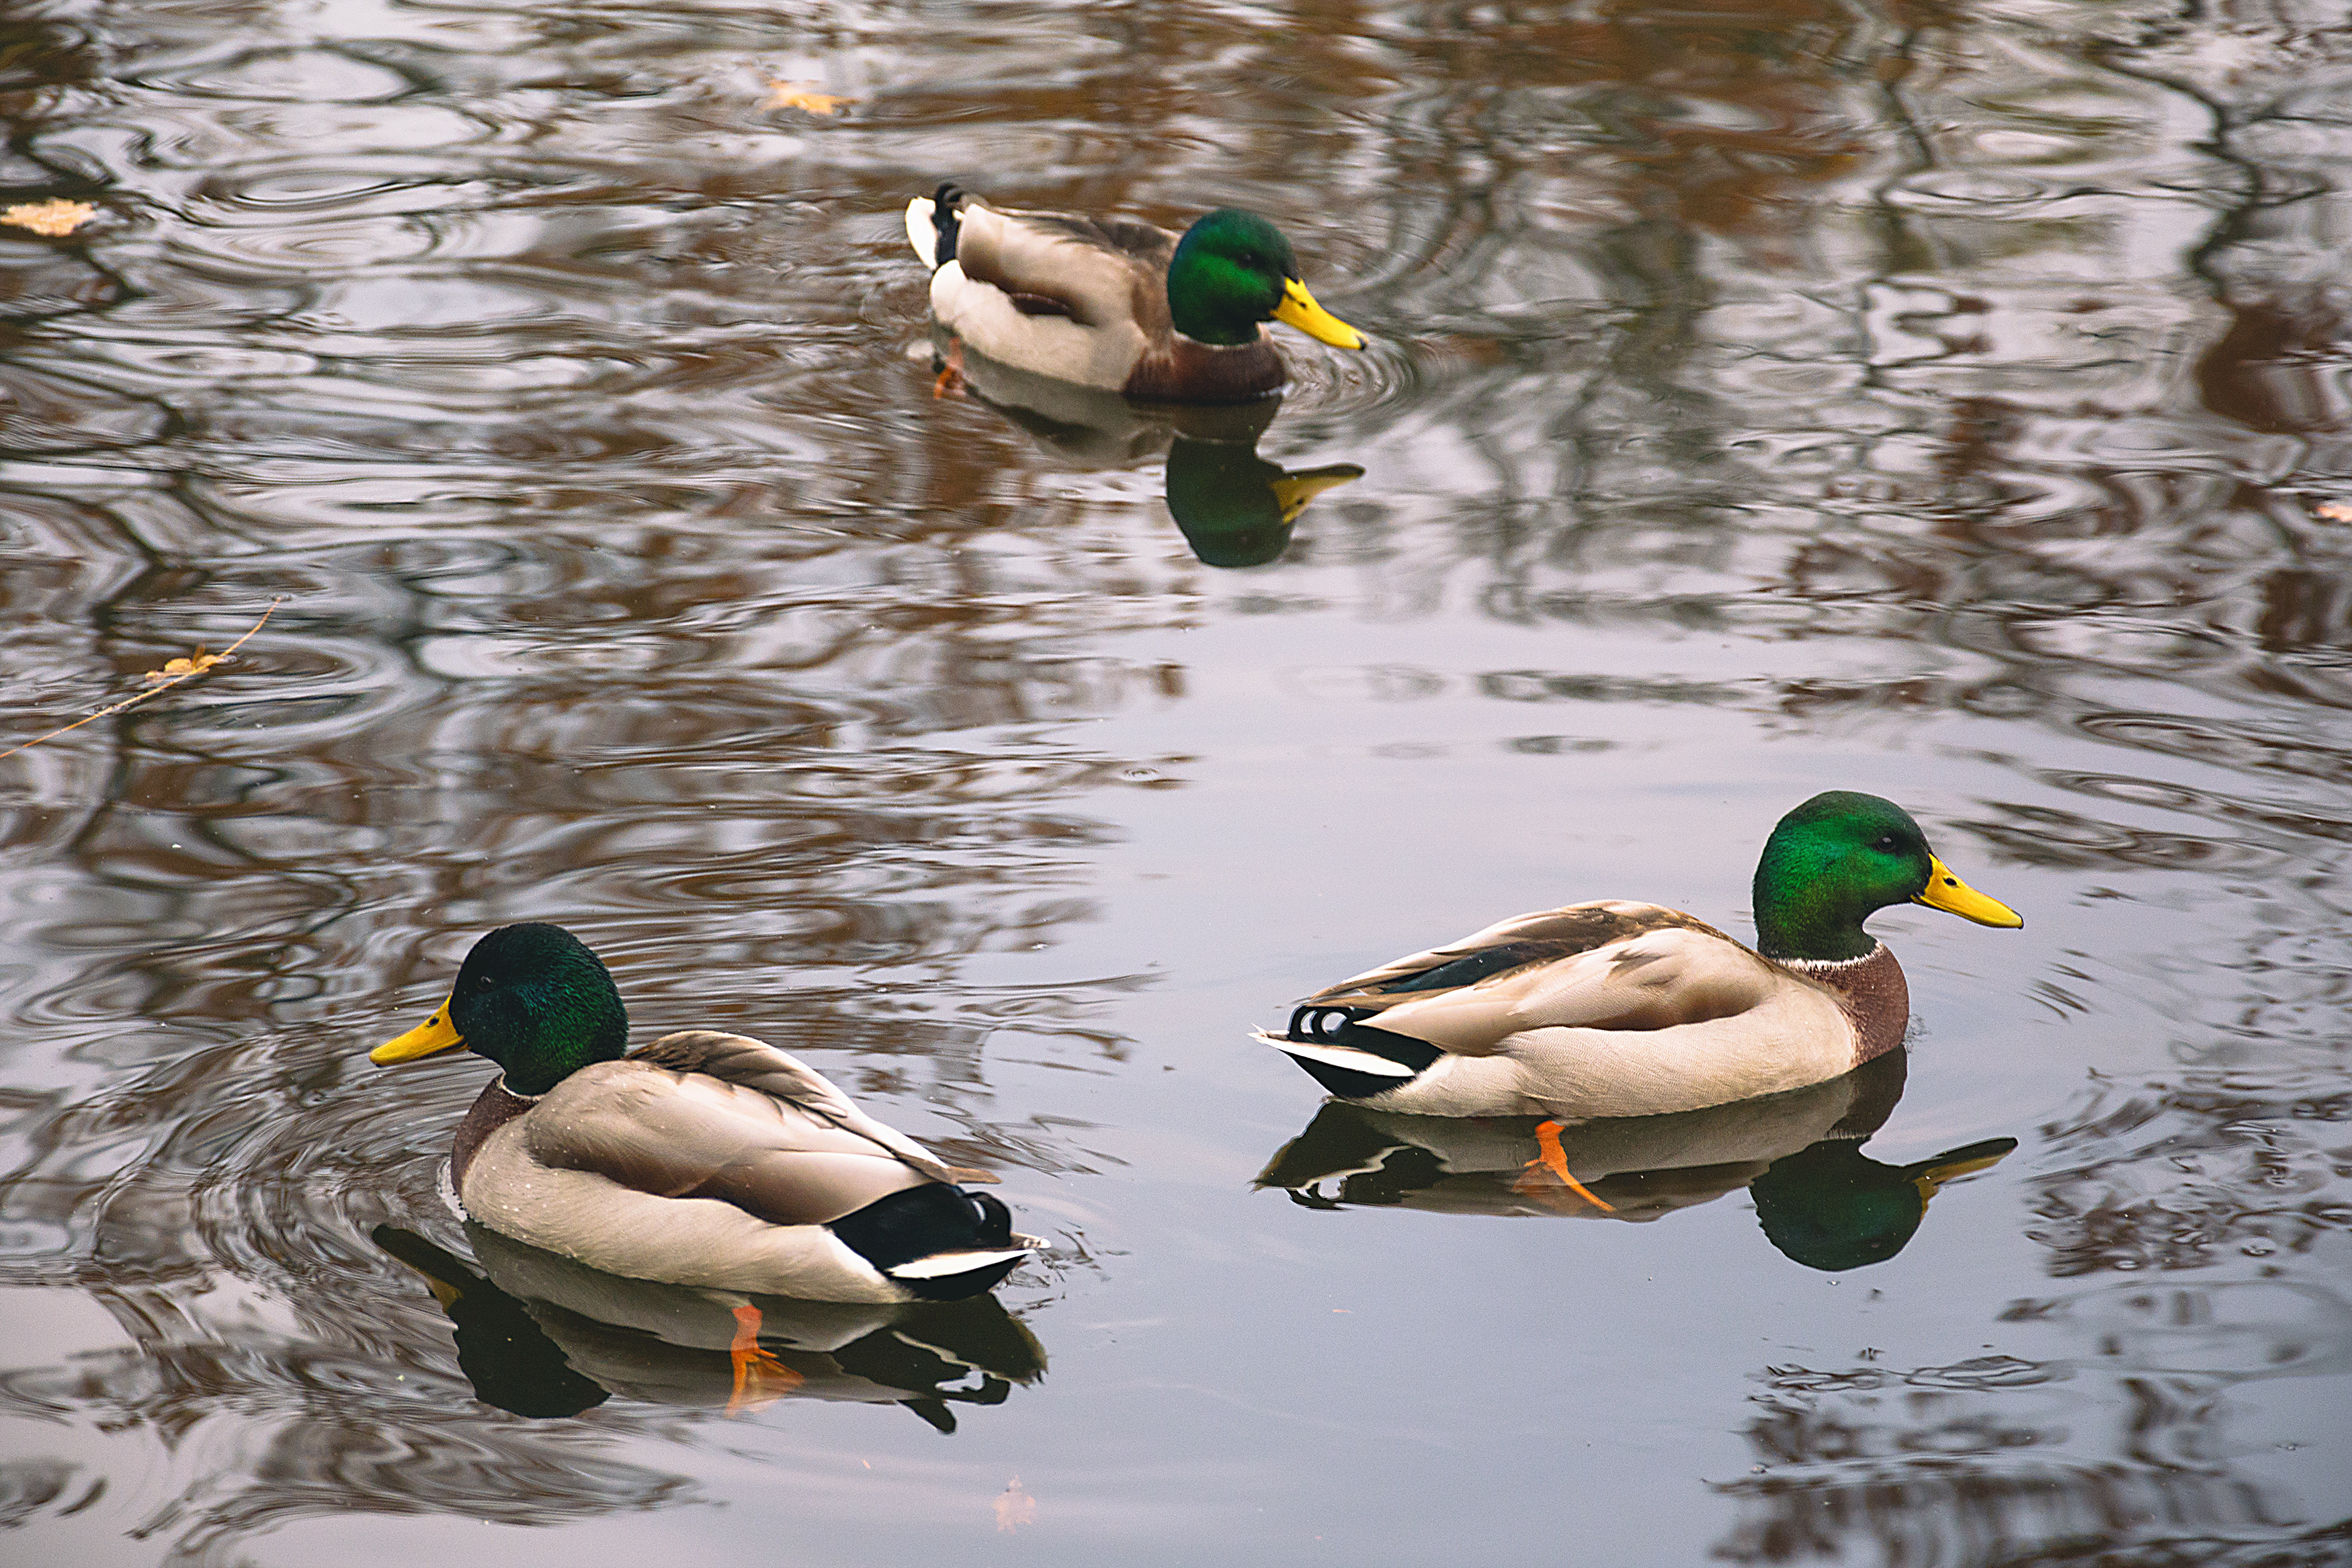 Free Image: Three Wild Ducks | Libreshot Public Domain Photos